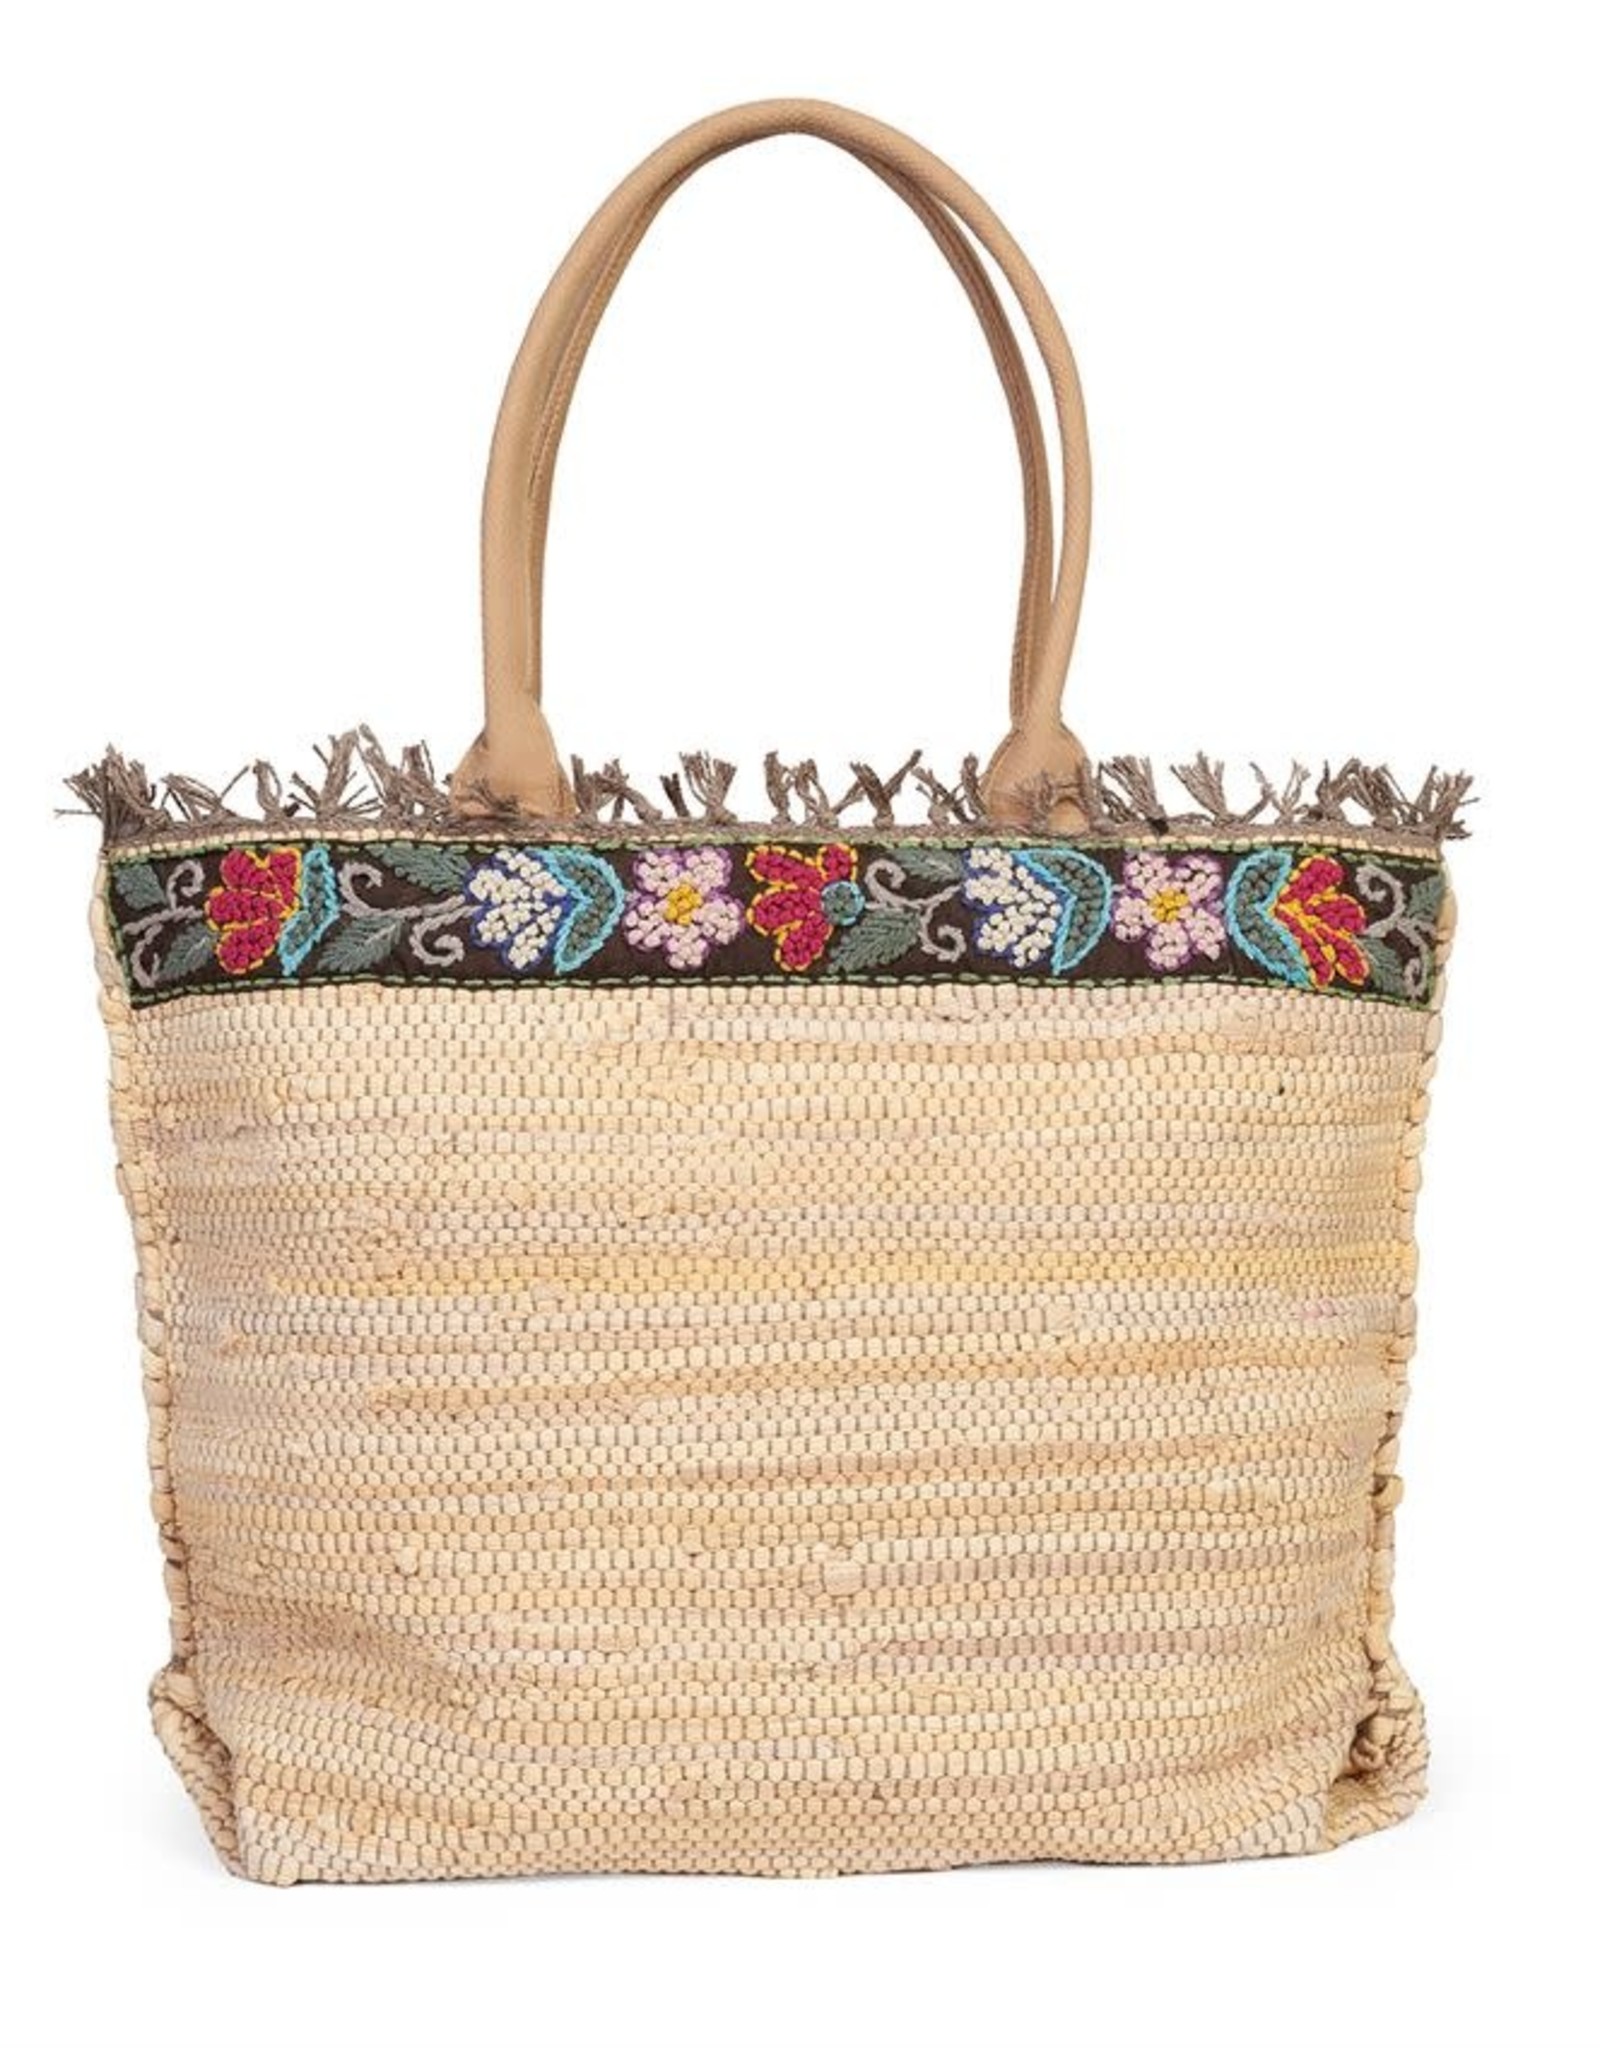 Coco & Carmen Poppins Artisan Floral Woven Tote Bag